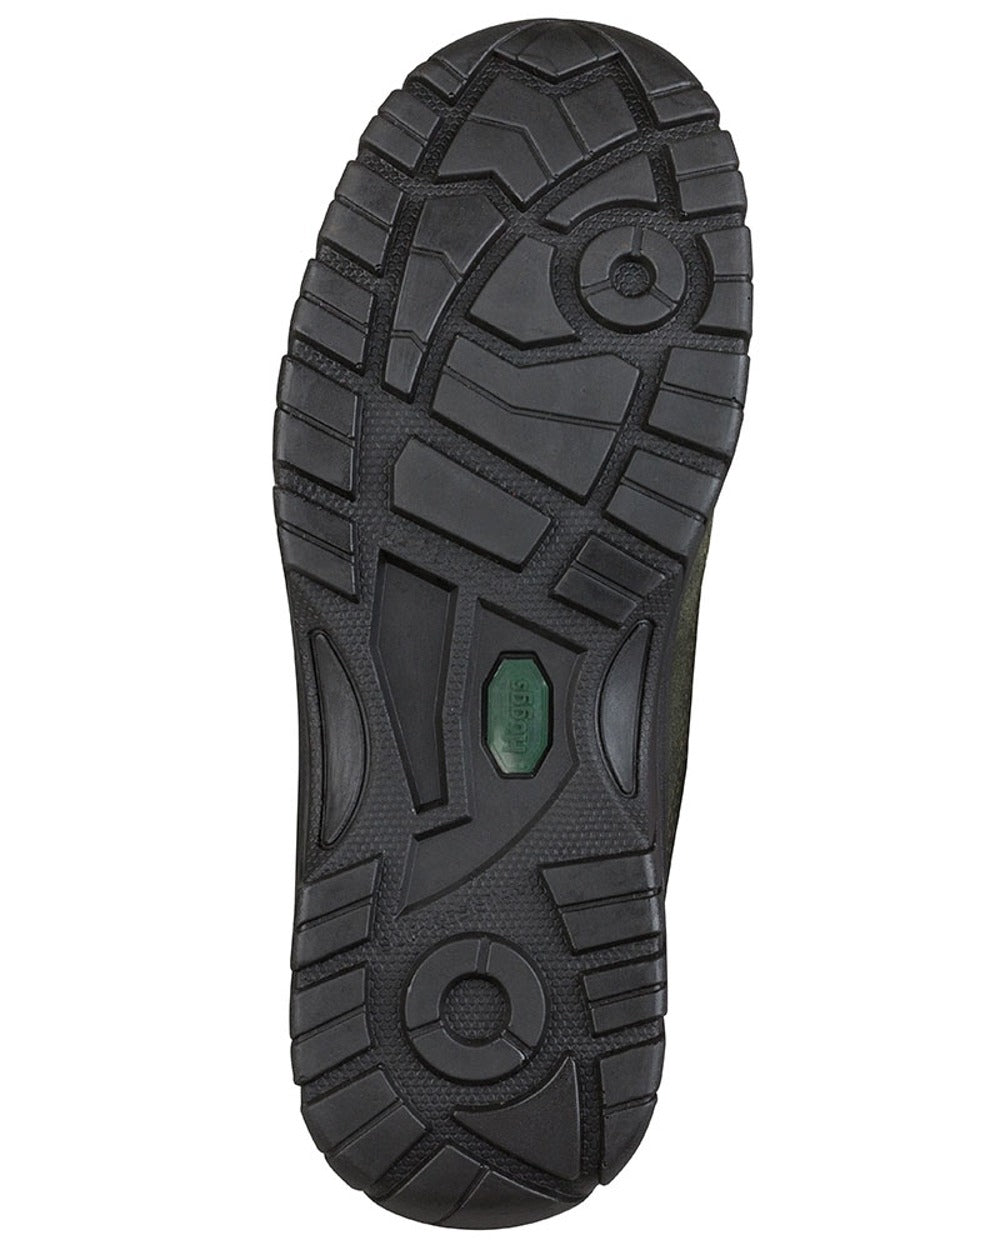 Fern Green coloured Hoggs of Fife Rambler Waterproof Hiking Boot on white background 